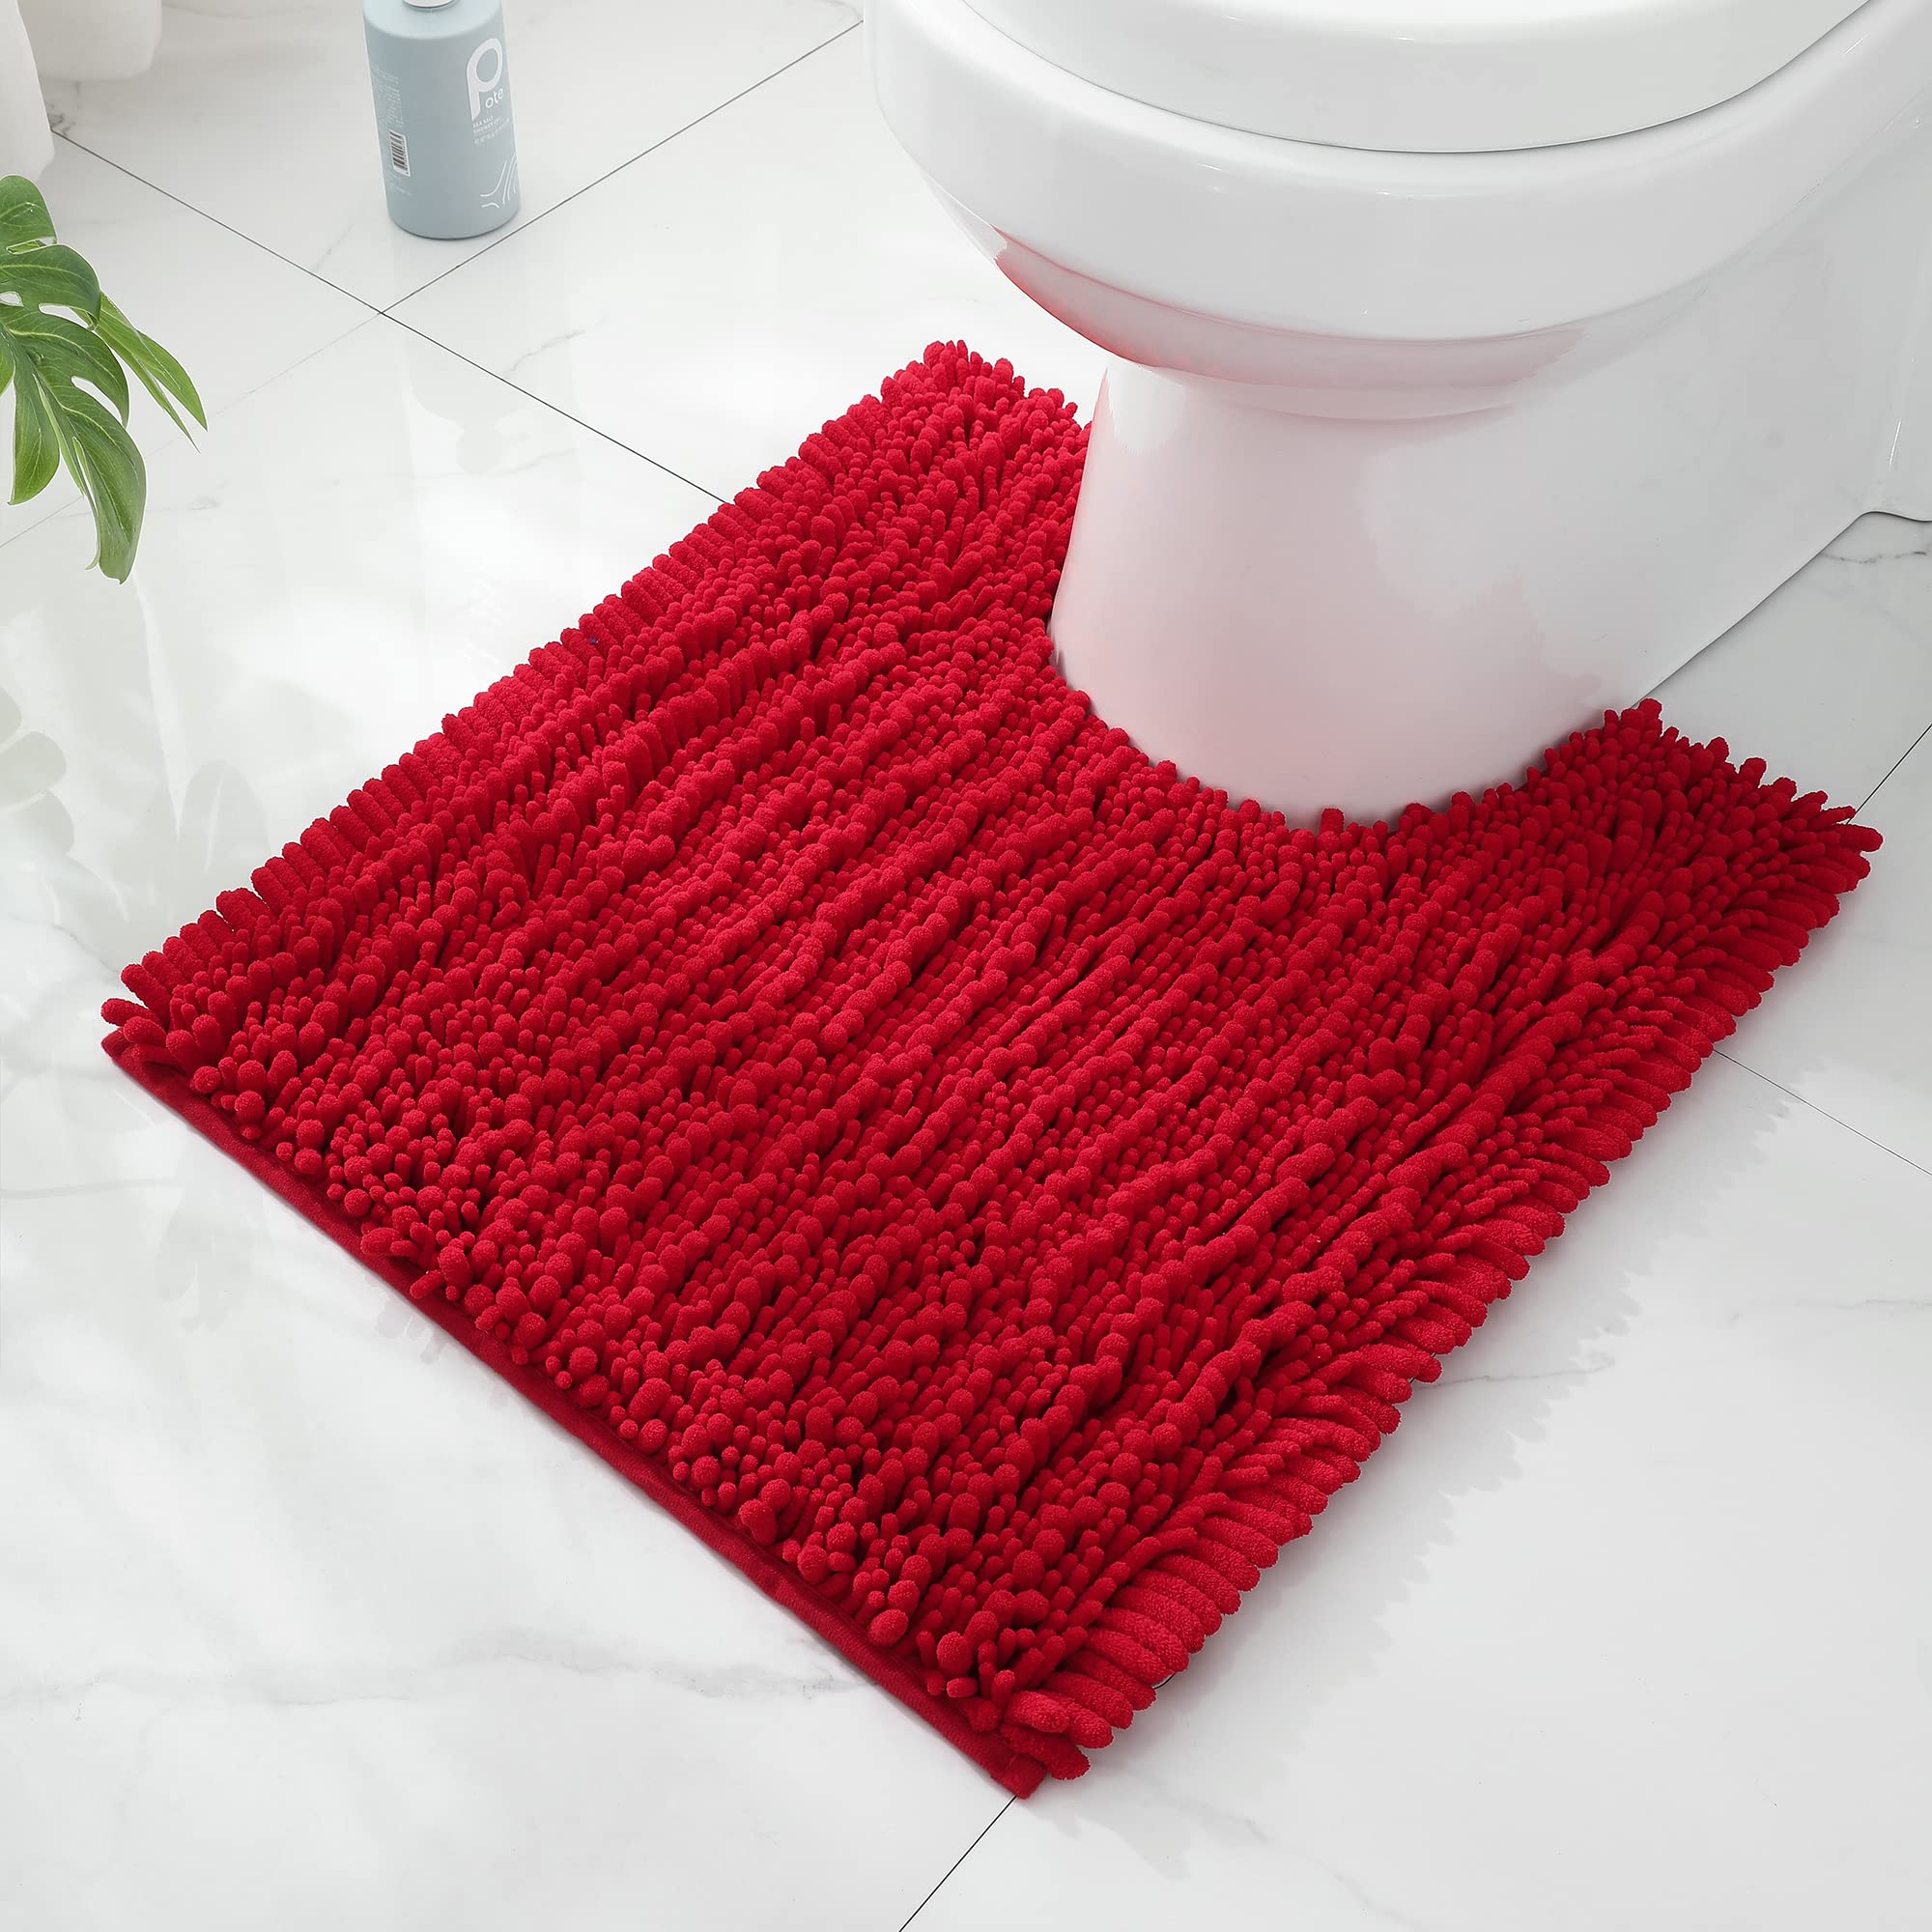 Floleopa Bathroom Contour Rug (24 X 20 Inches, Red) Non-Slip Bath Mat For Bathroom Water Absorbent Soft Microfiber Shaggy Bathro